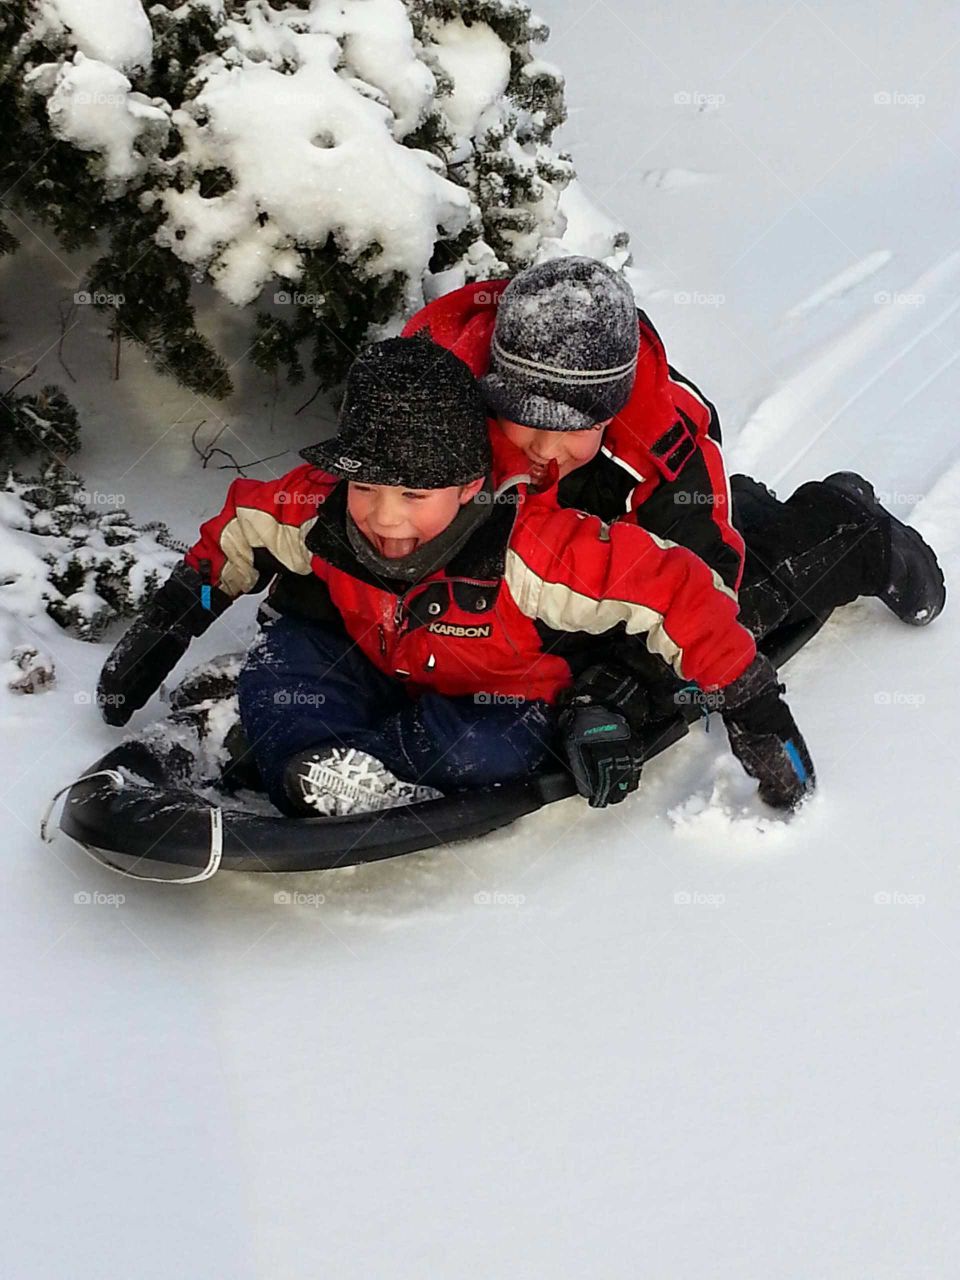 Two boys sliding on snow having big fun